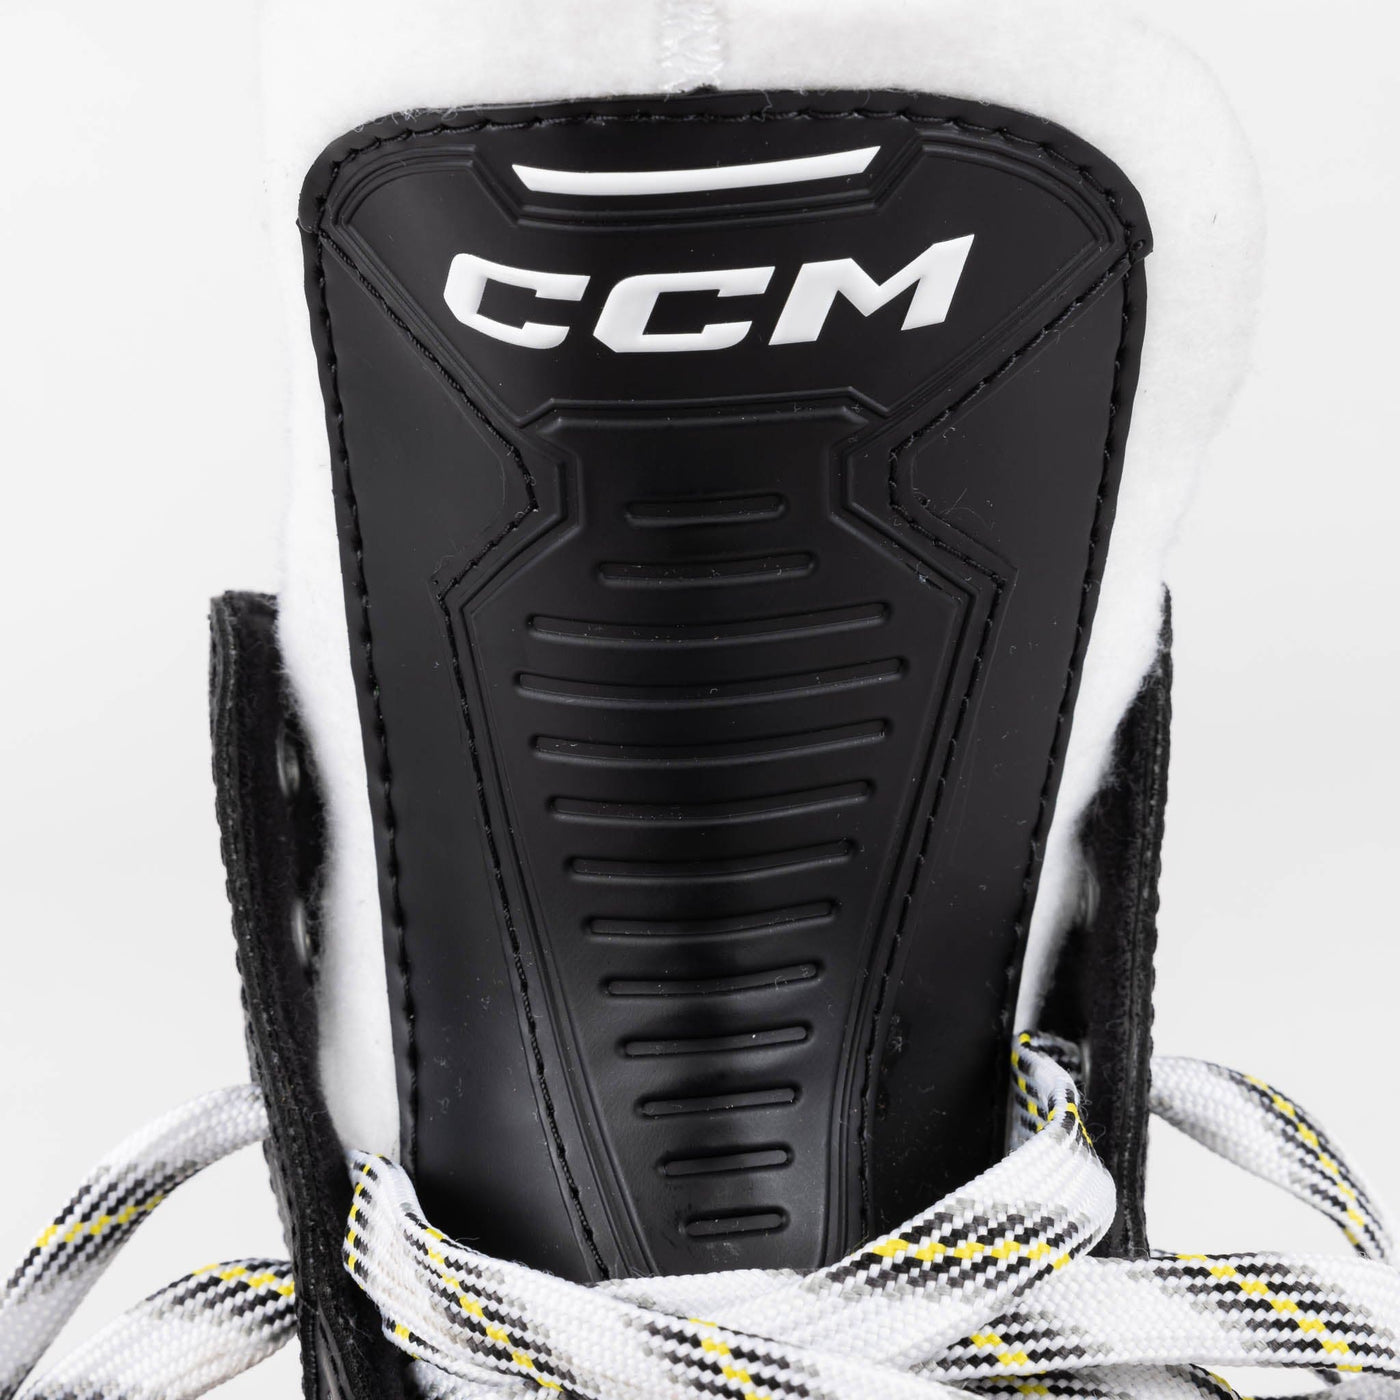 CCM Tacks AS570 Junior Hockey Skates - The Hockey Shop Source For Sports